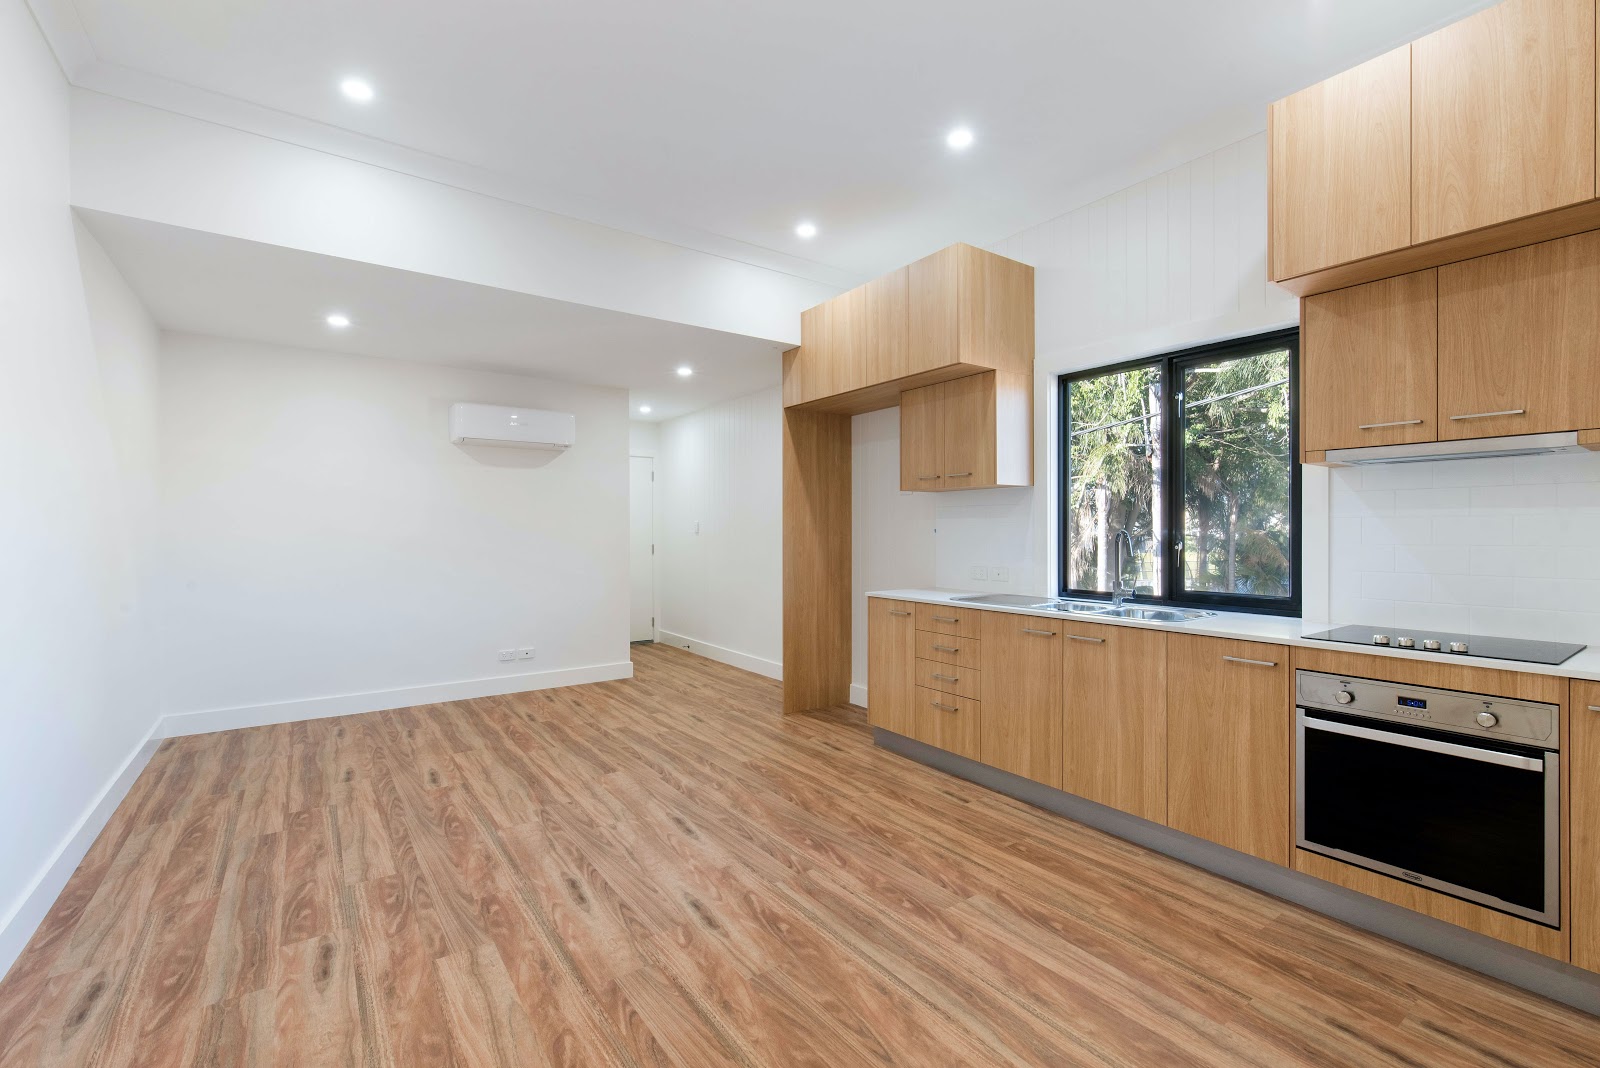 Empty kitchen with wood floors